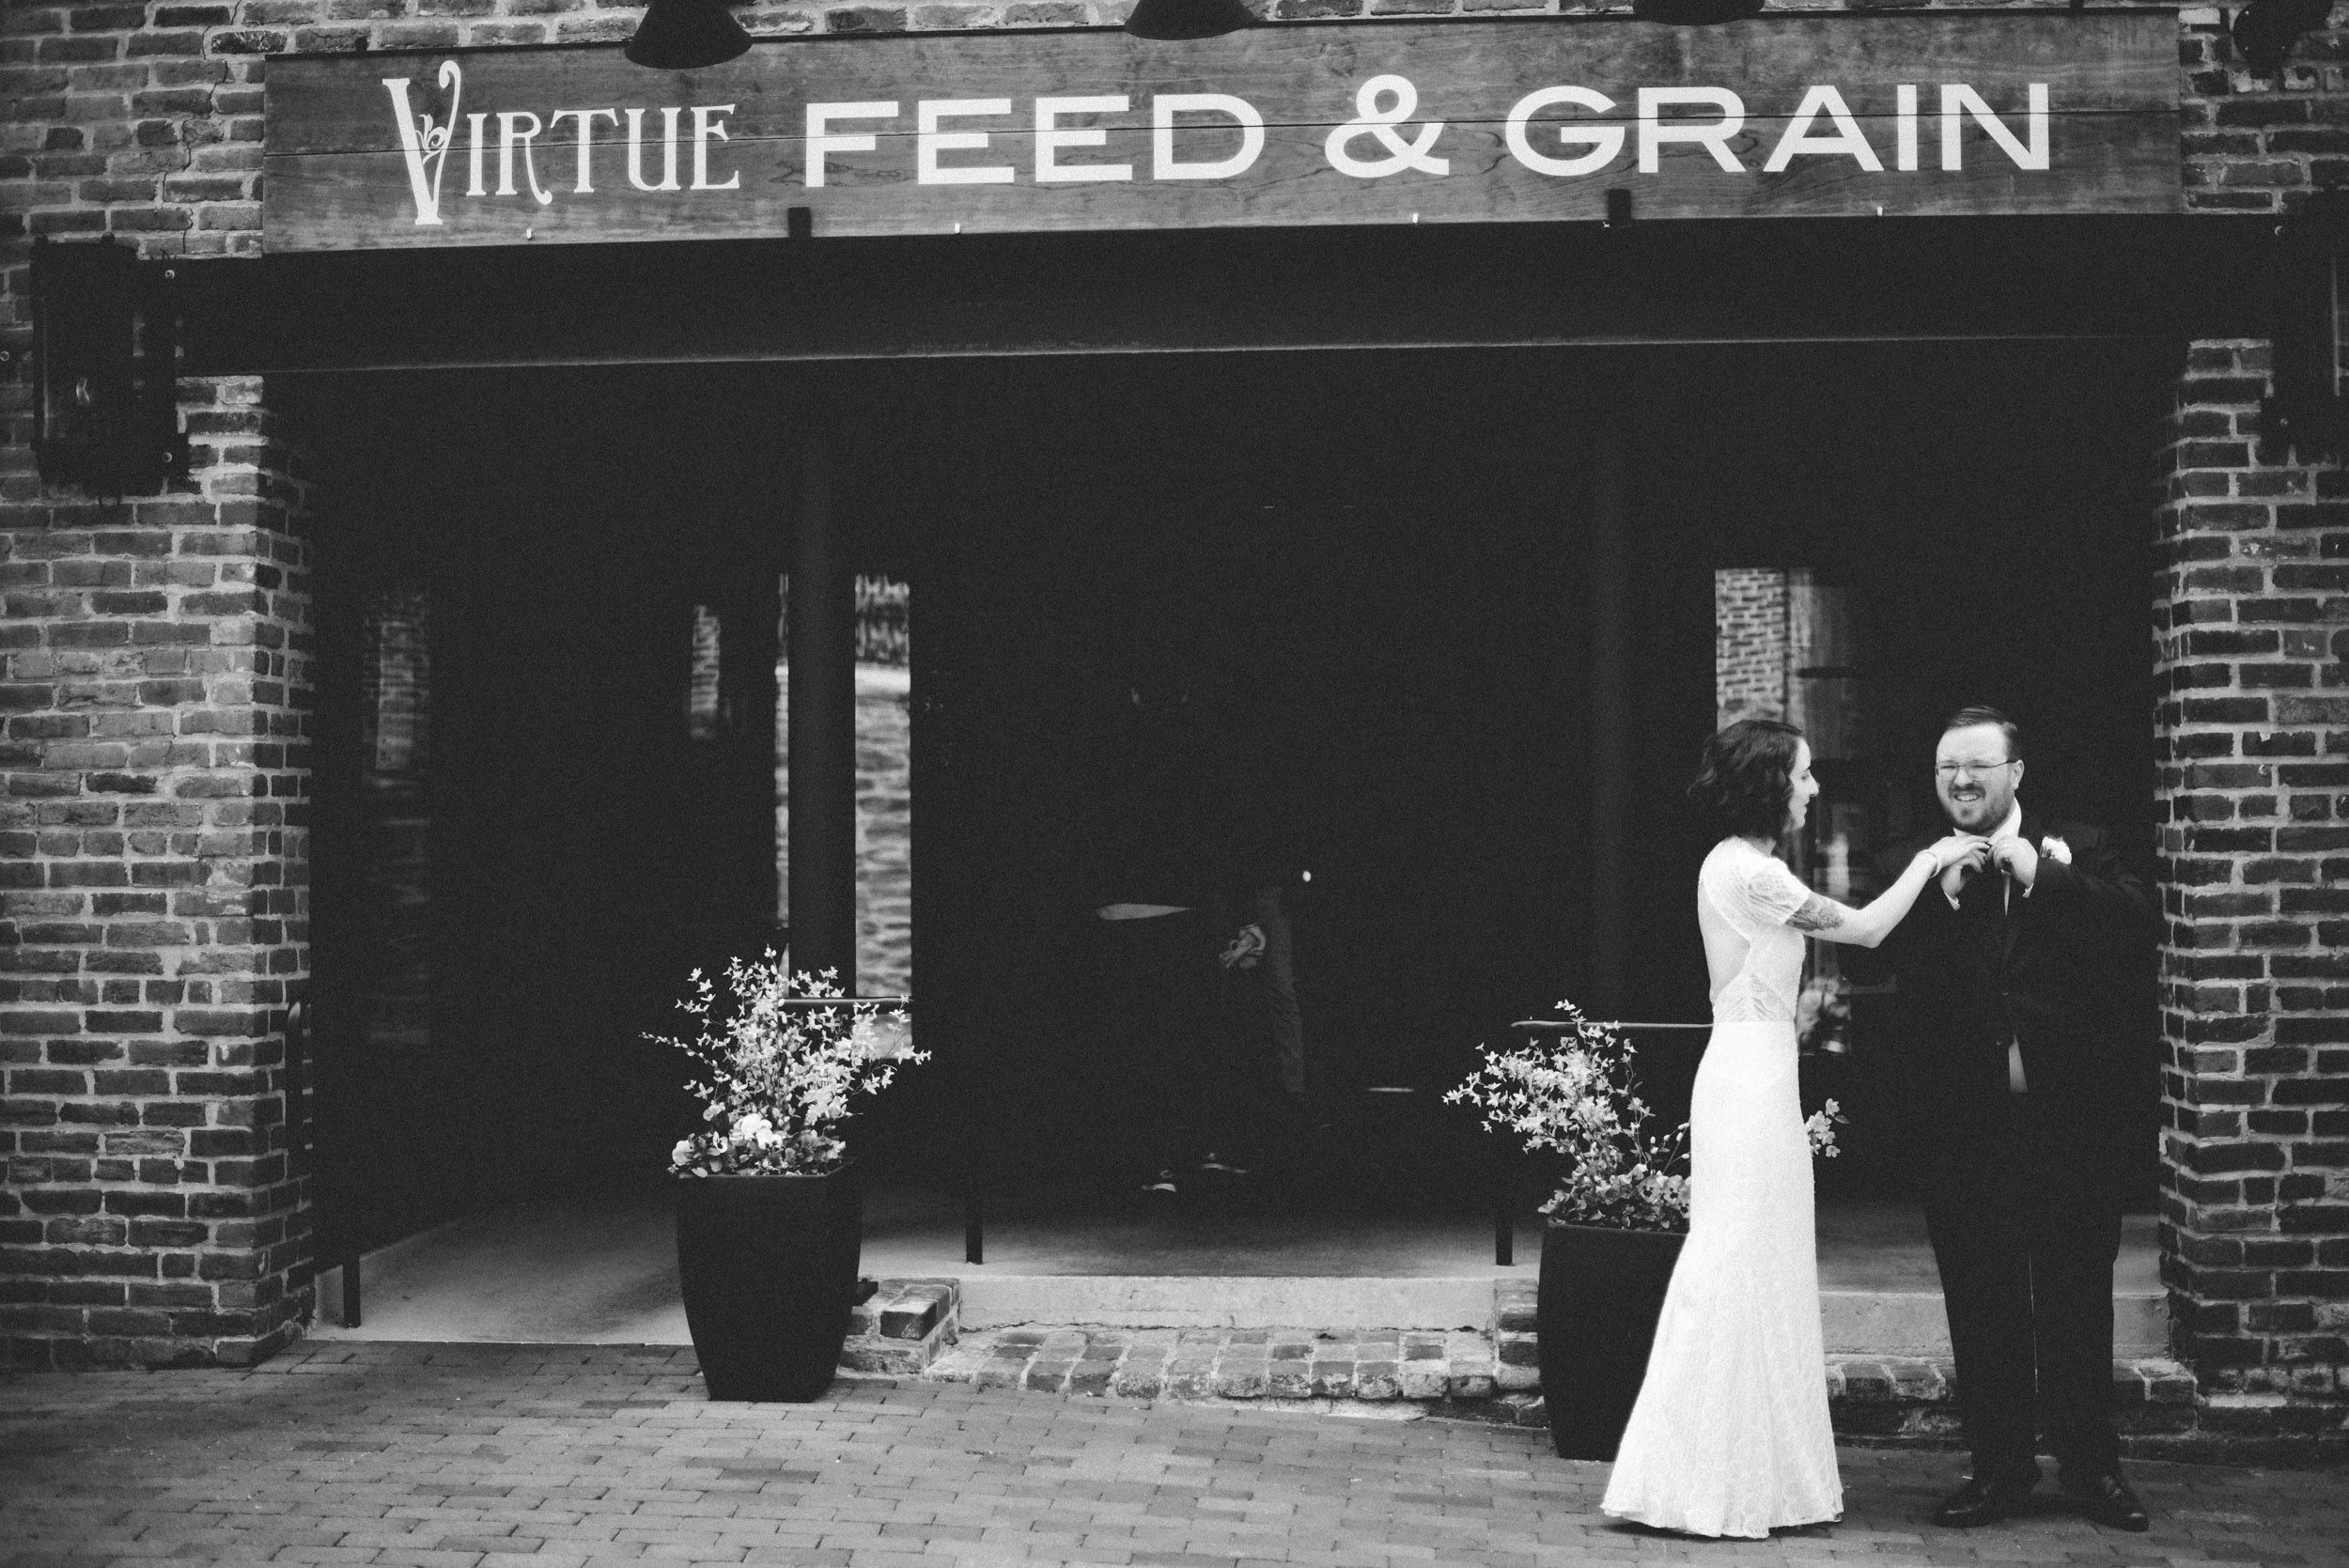 Virtue, Feed, & Grain wedding